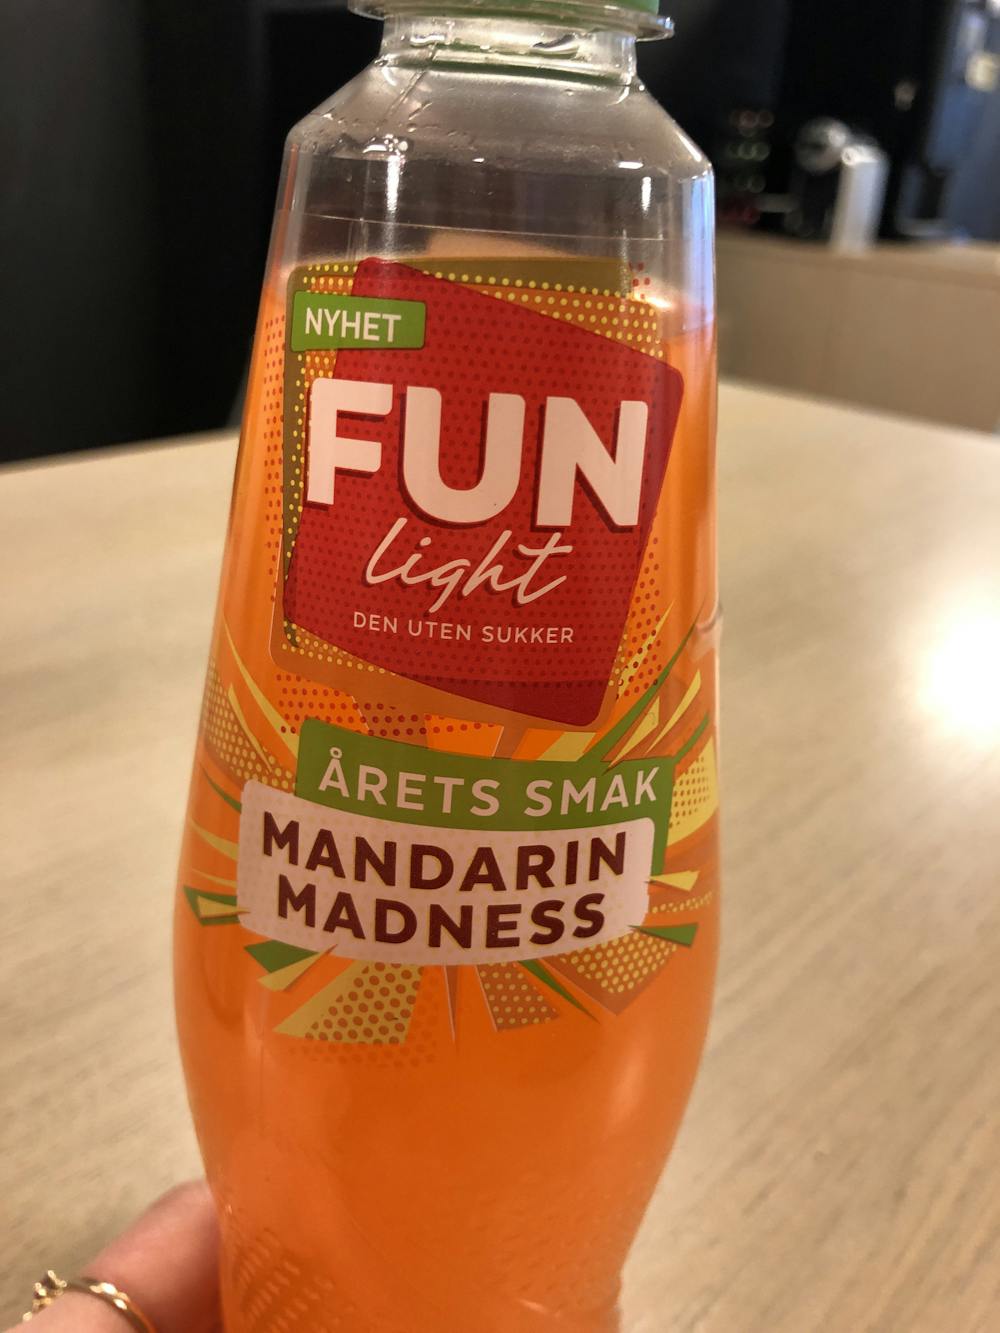 Fun light mandarin madness, Fun light